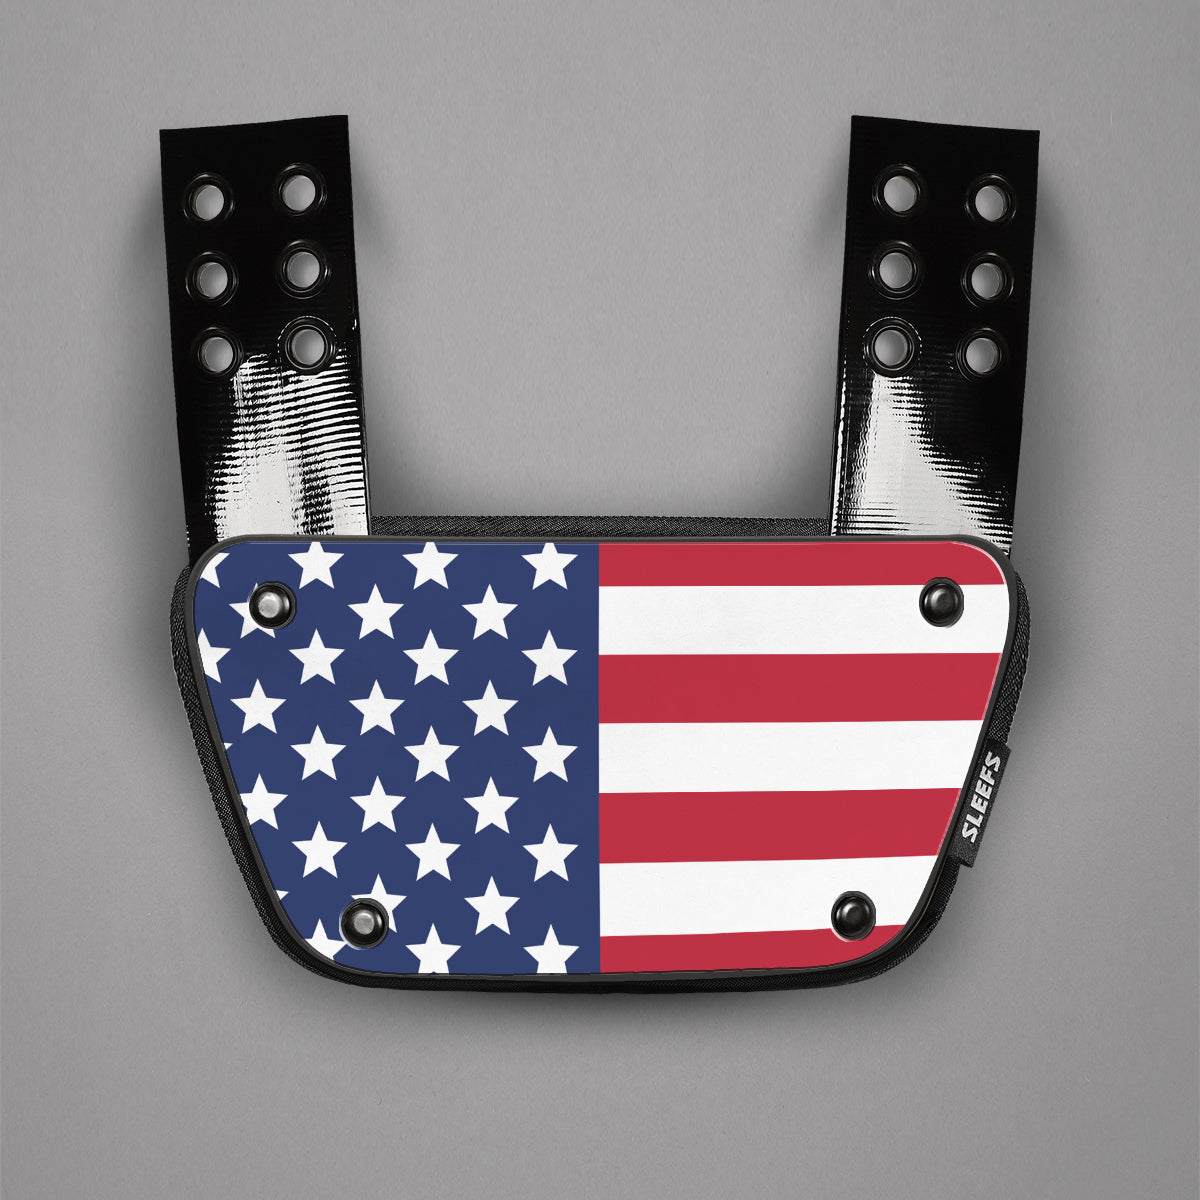 USA Flag Sticker for Back Plate